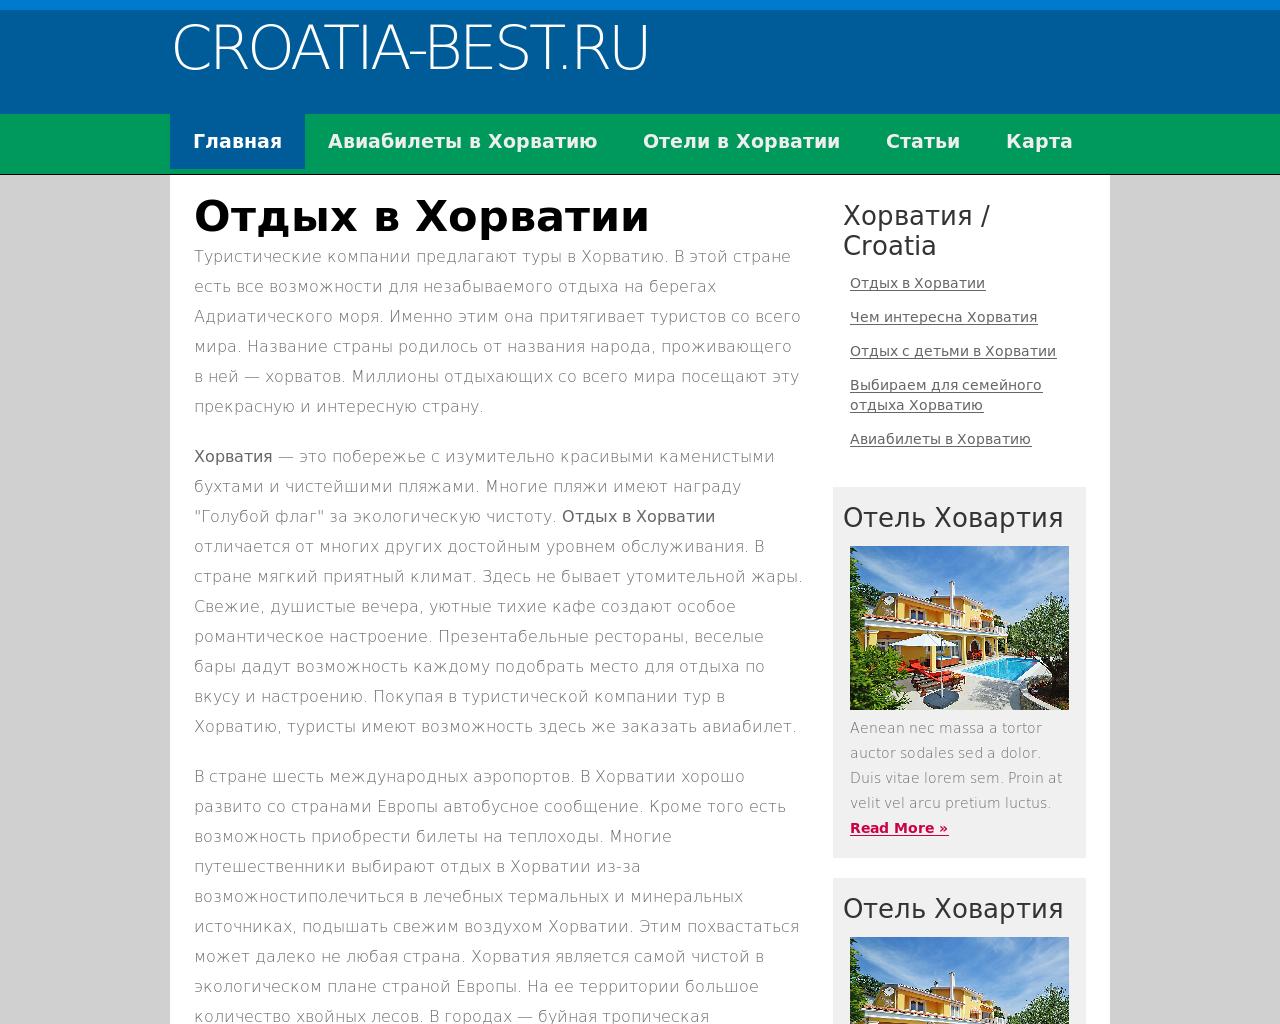 Изображение сайта croatia-best.ru в разрешении 1280x1024